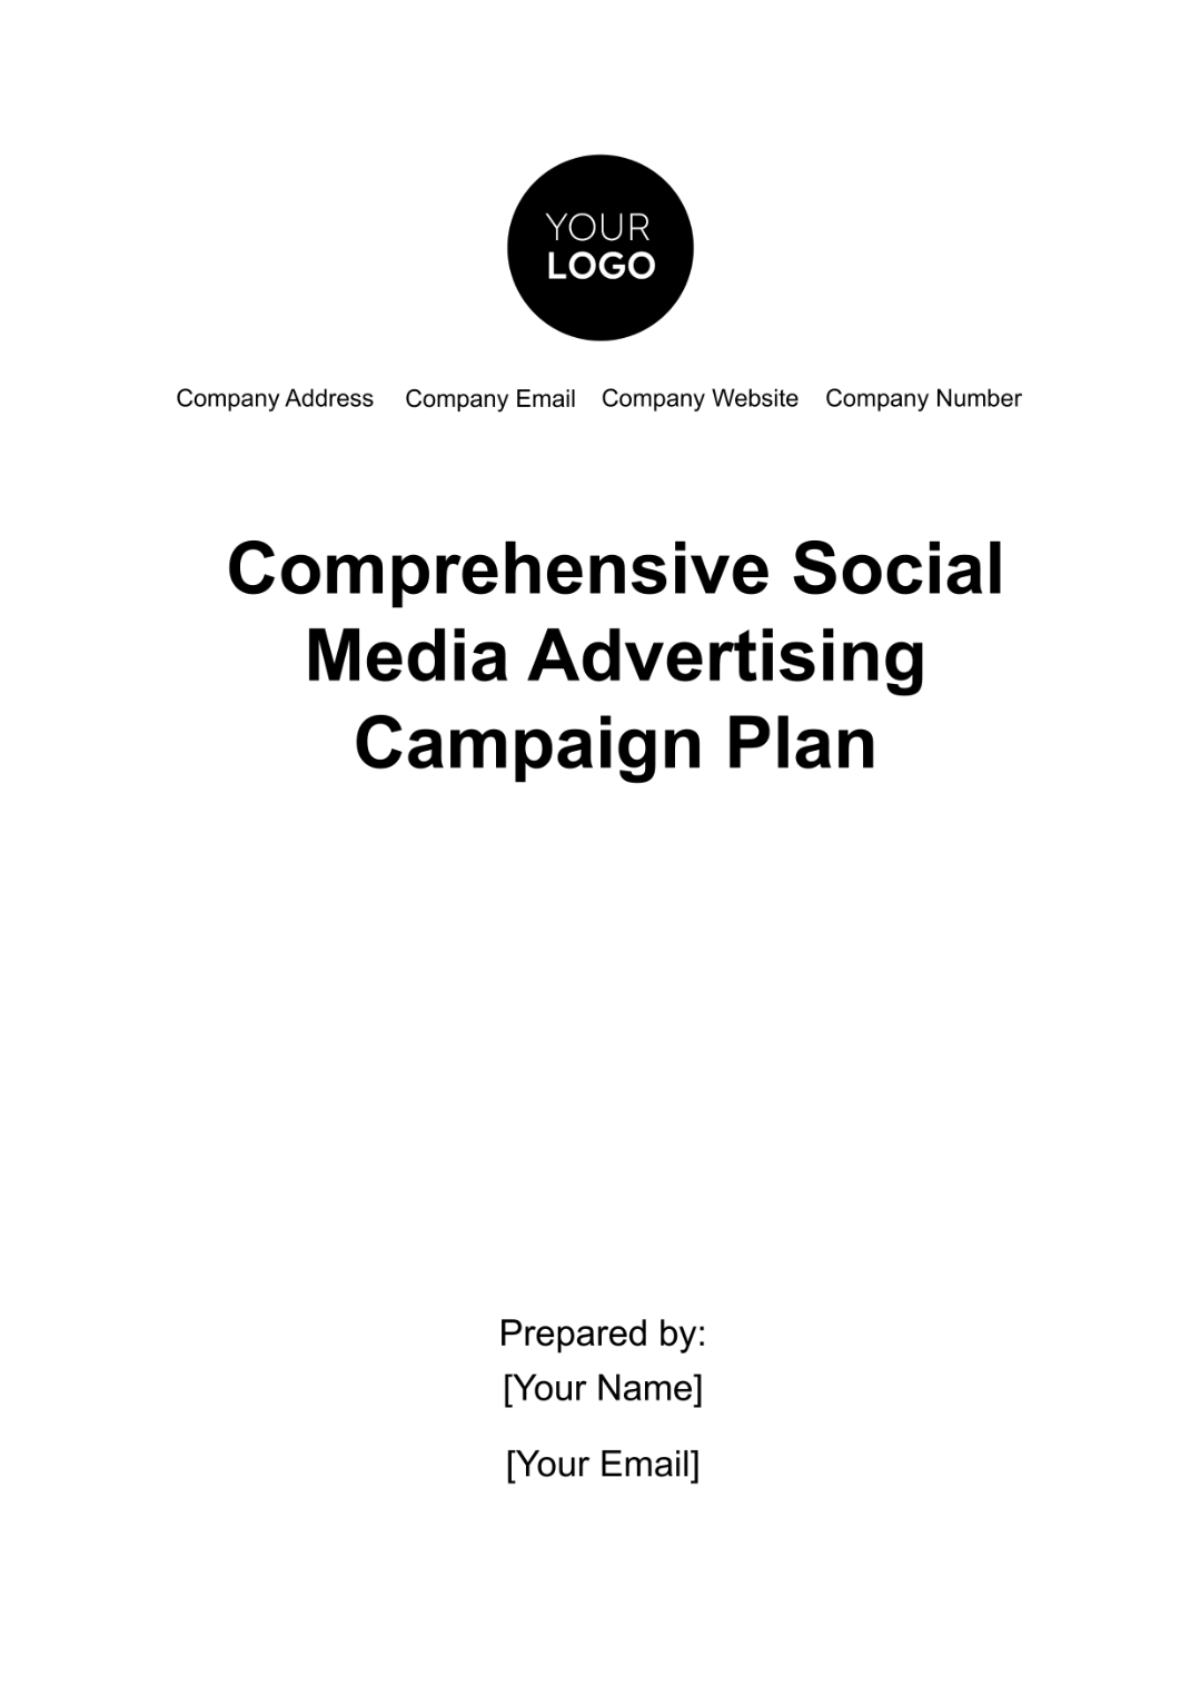 Comprehensive Social Media Advertising Campaign Plan Template